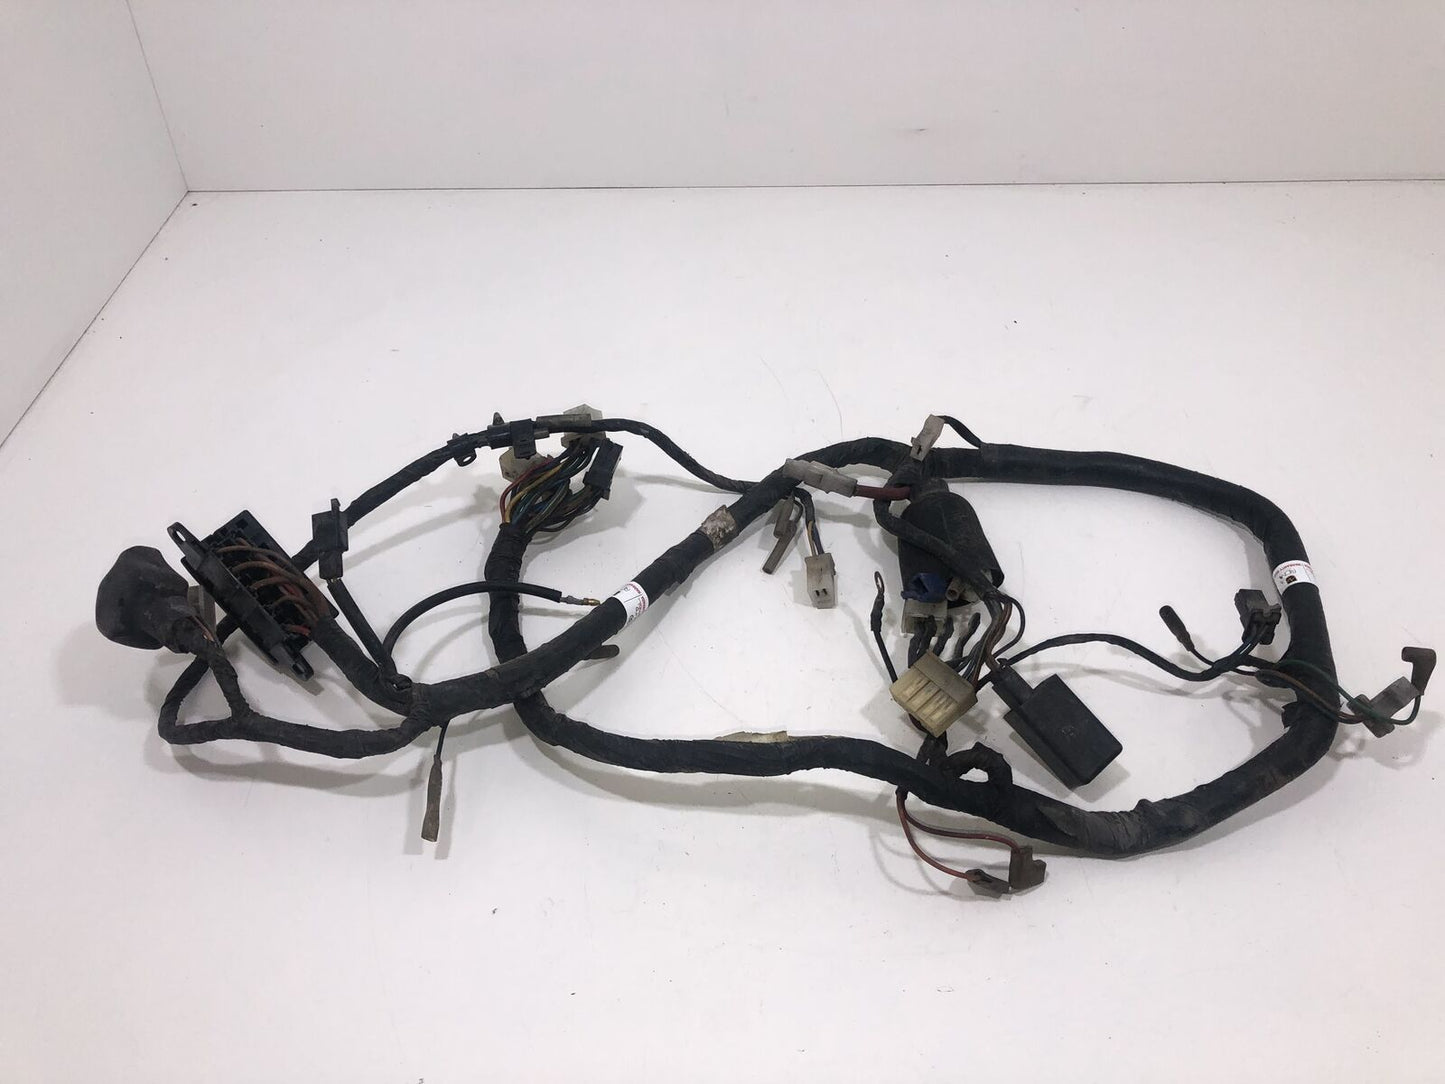 Electrical System Tdm 850 Jack Wires Wiring Harness Yamaha Tdm 850 1991 1995